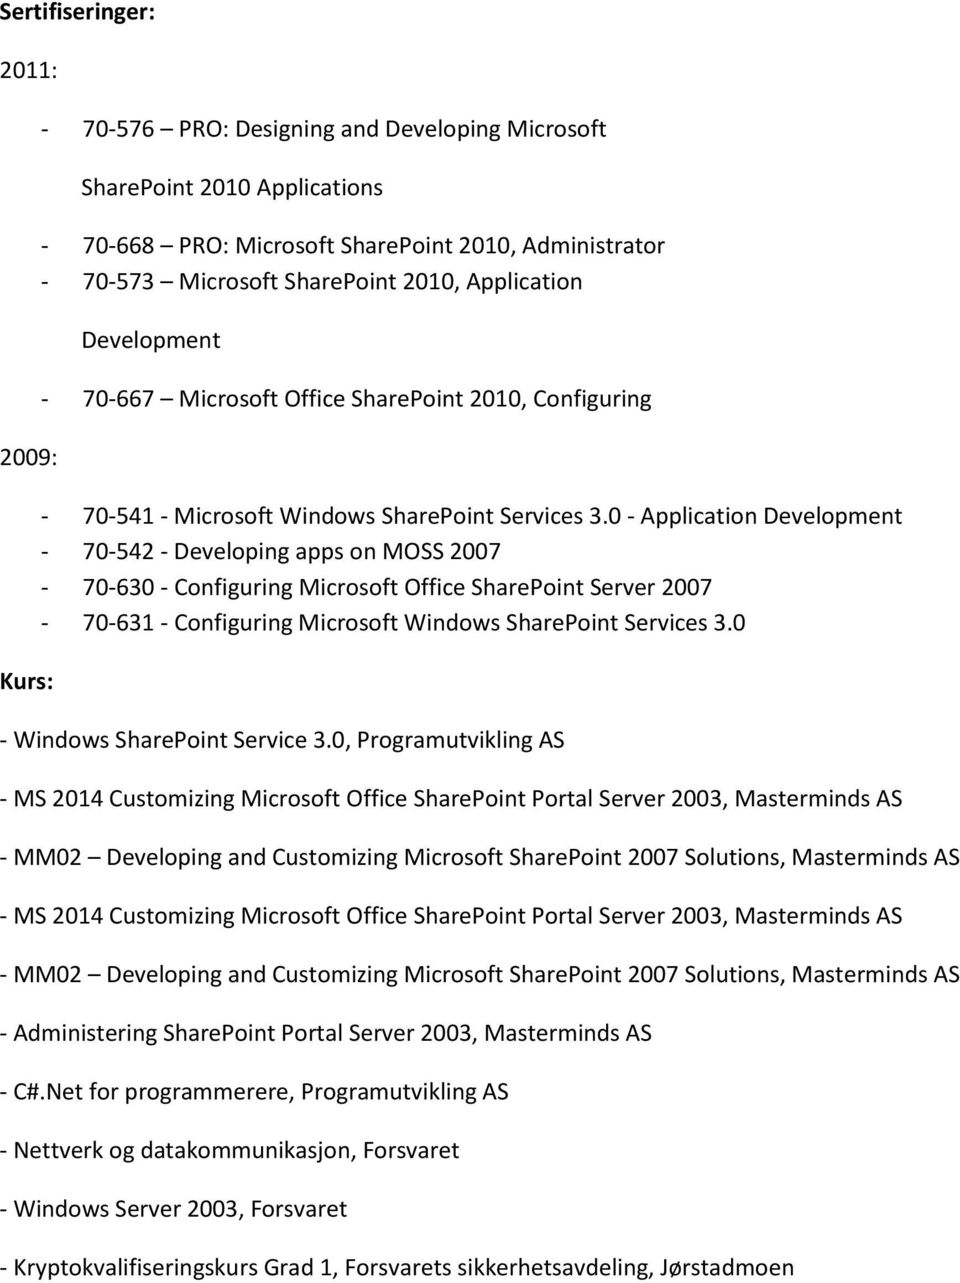 0 - Application Development - 70-542 - Developing apps on MOSS 2007-70-630 - Configuring Microsoft Office SharePoint Server 2007-70-631 - Configuring Microsoft Windows SharePoint Services 3.